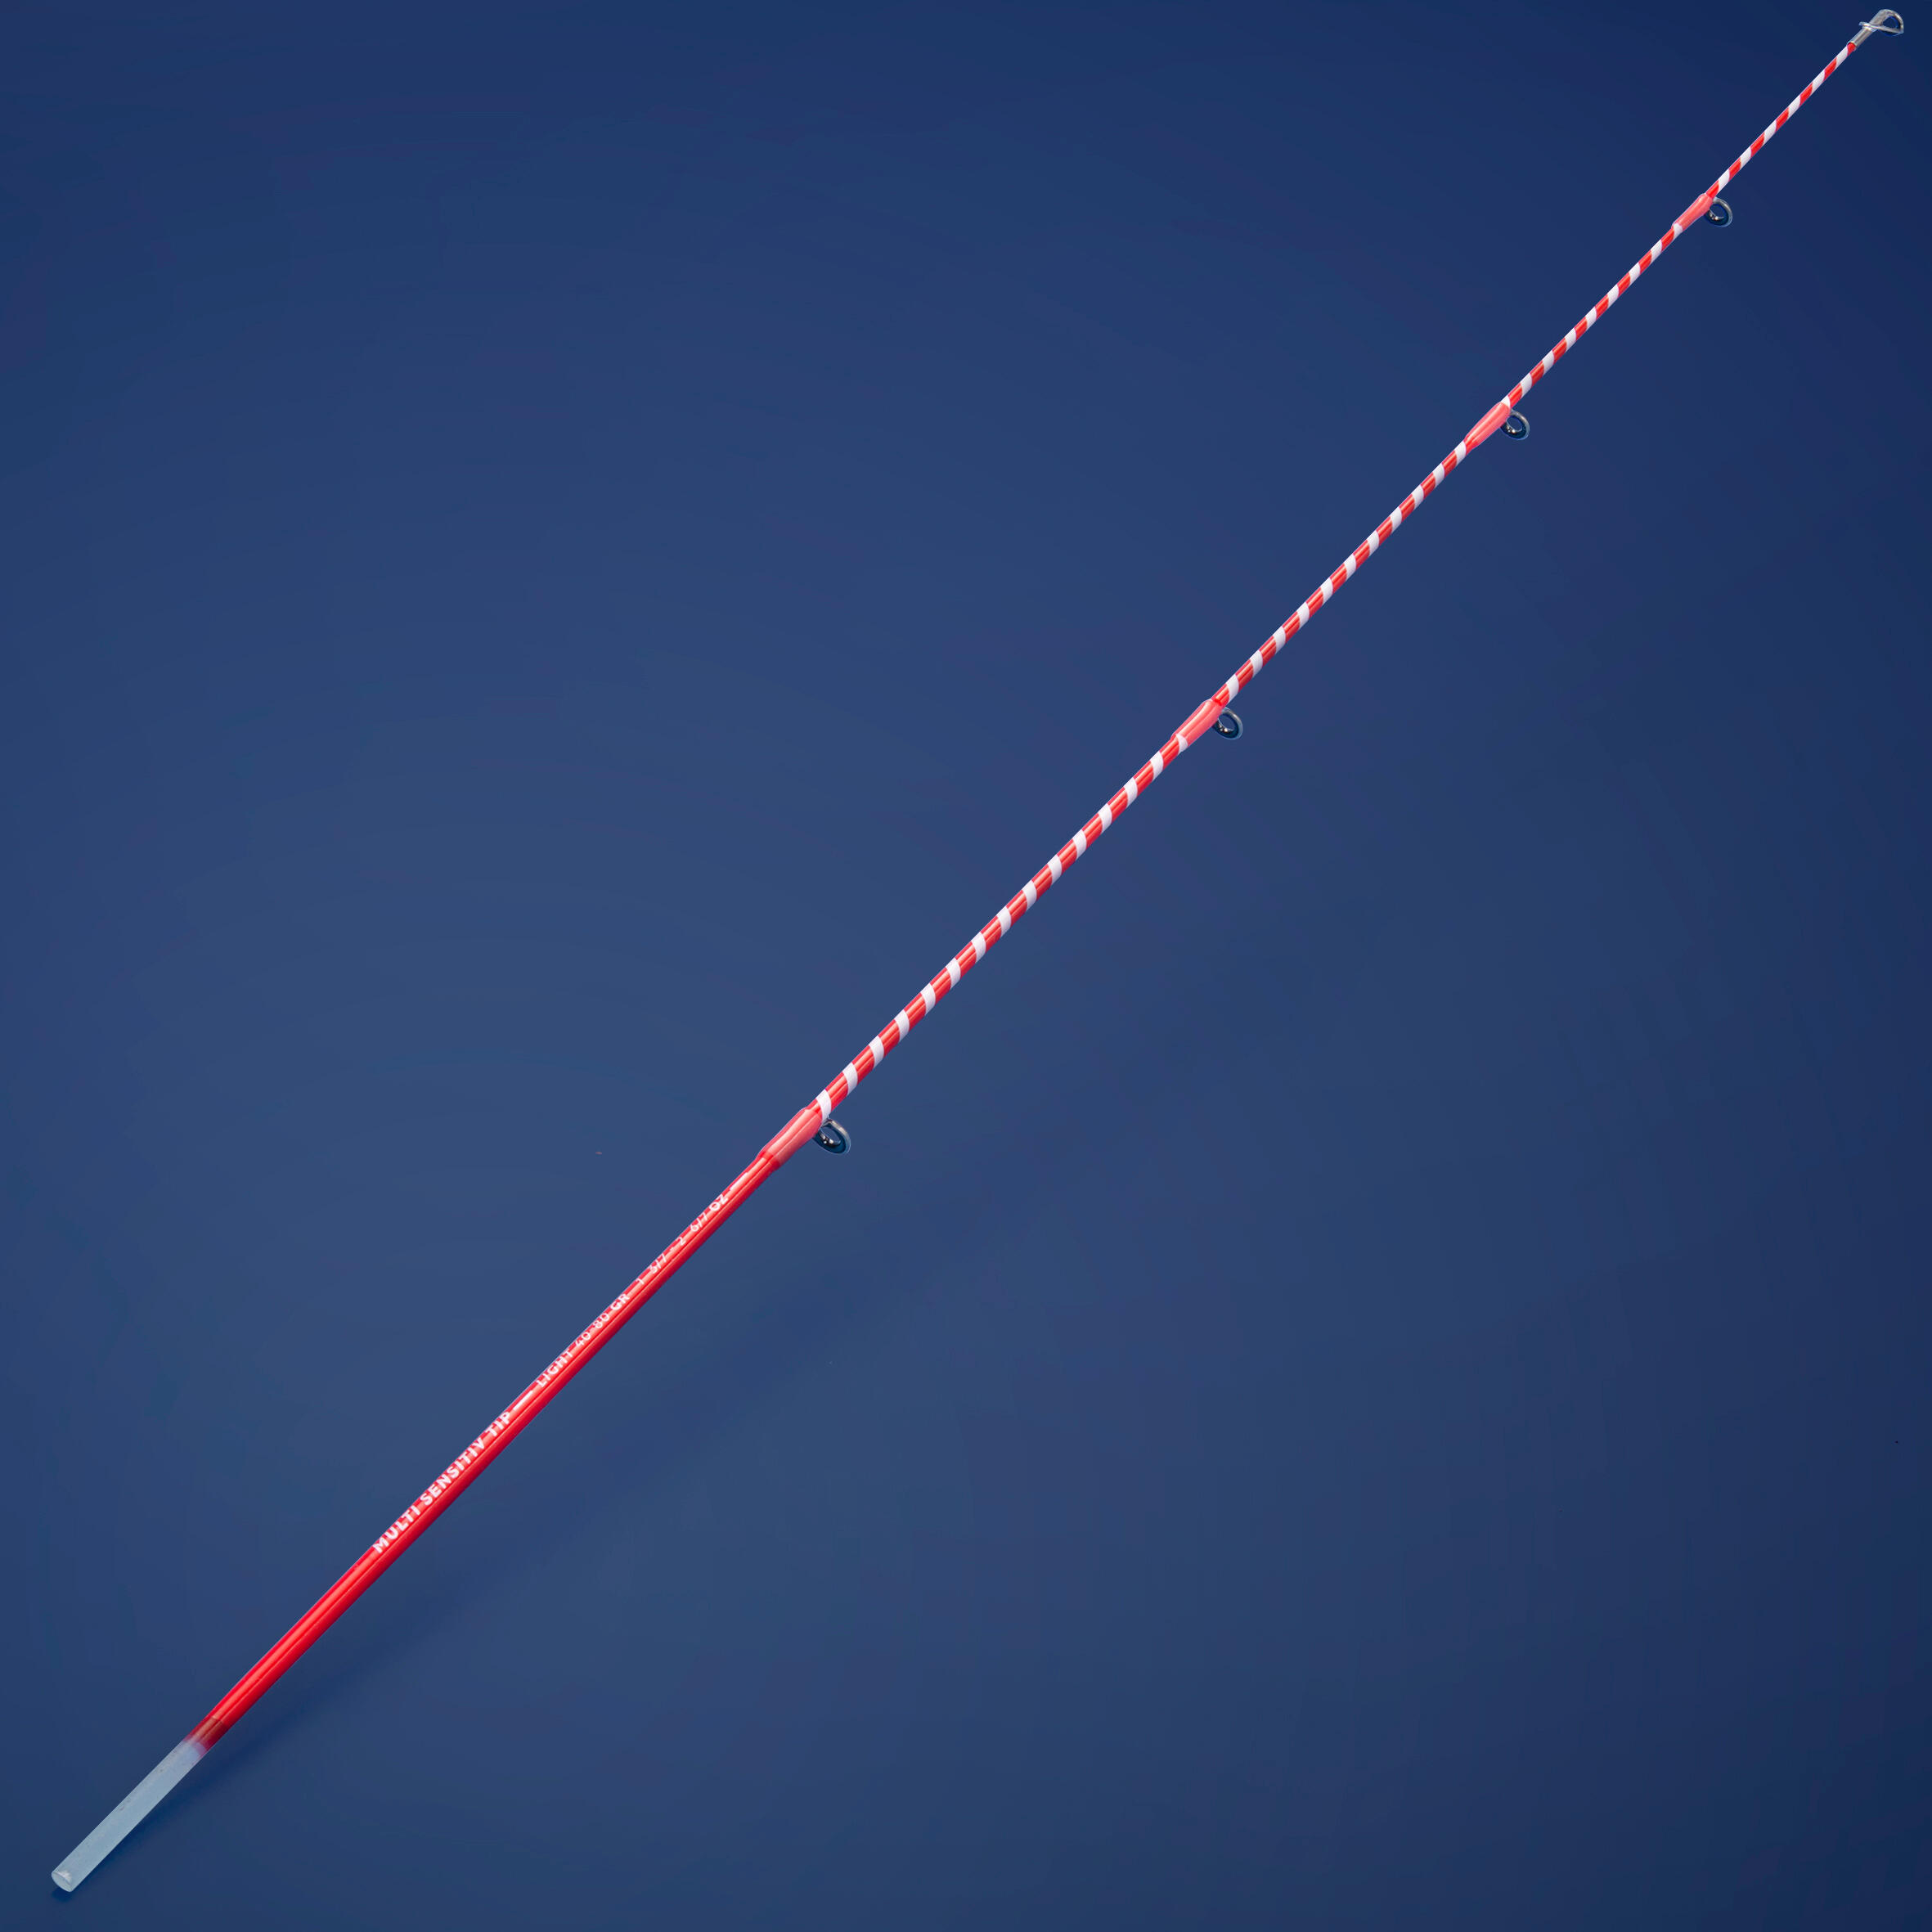 SEA LEDGERING TELESCOPIC ROD SEACOAST LIGHT 500 350 MULTITIP - Decathlon